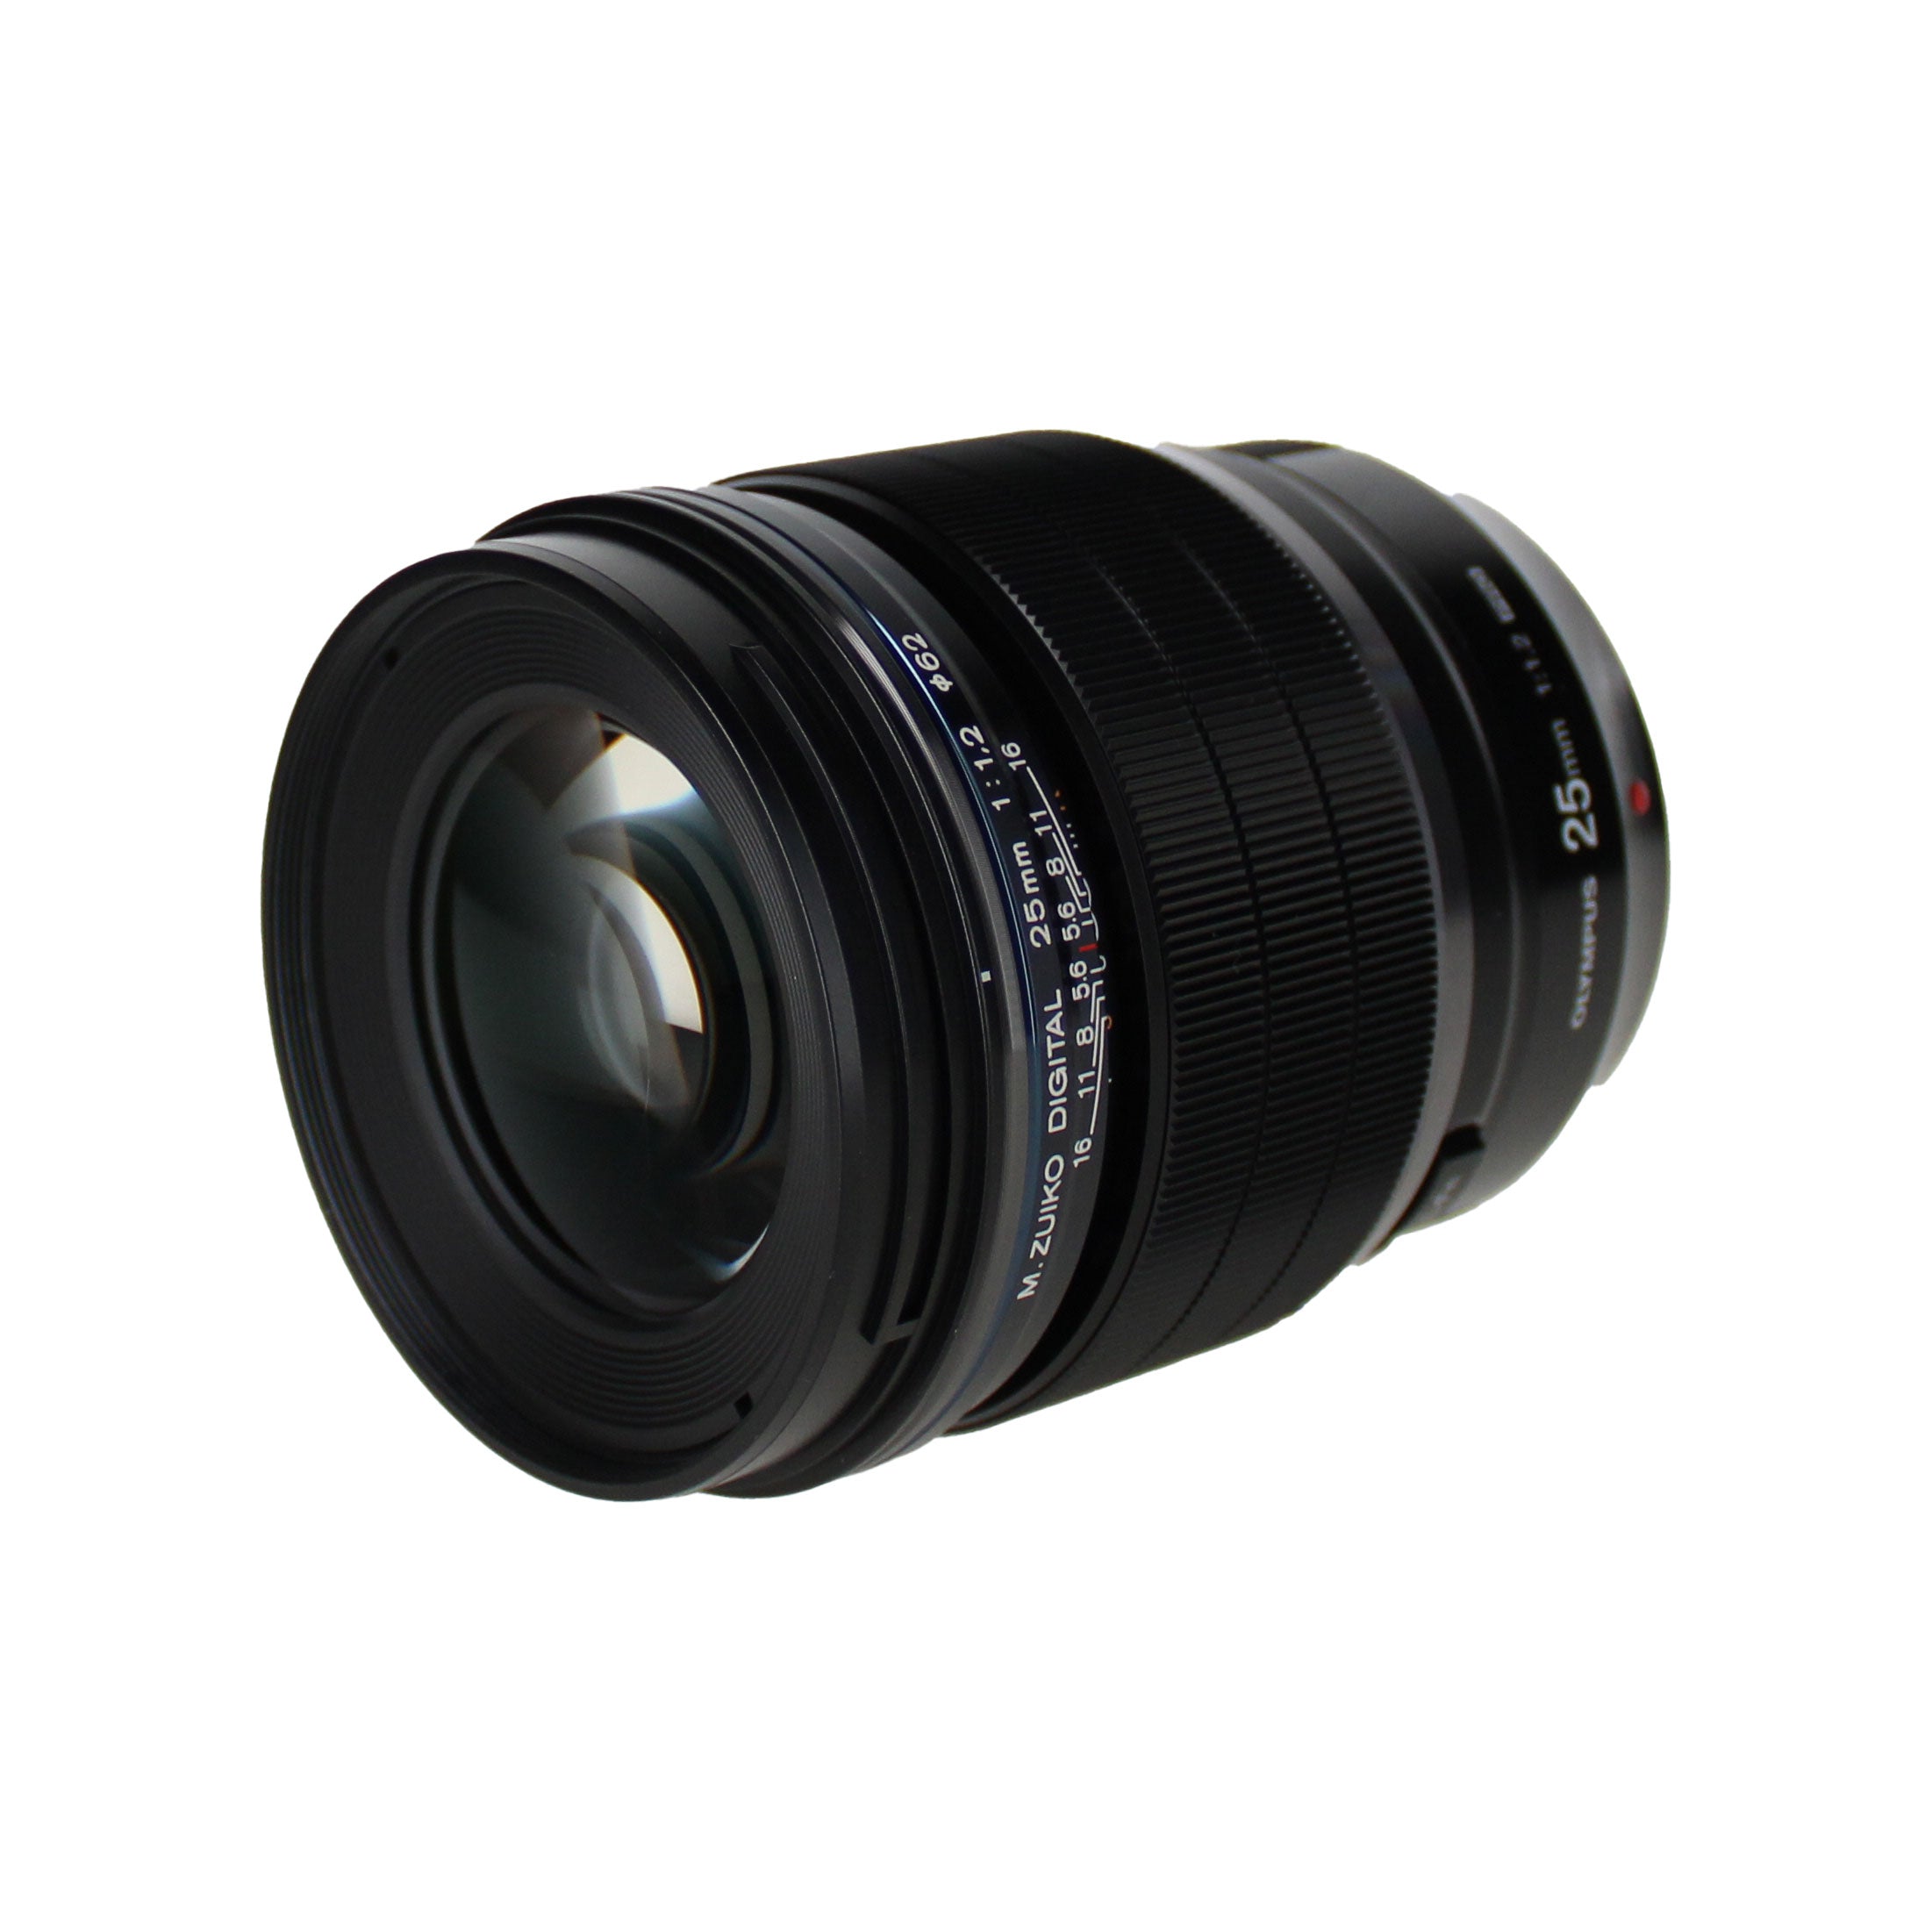 Olympus M. Zuiko Digital ED 25 mm 1:1.2 Pro Lens, Suitable for All MFT Cameras (Olympus OM-D & Pen Models, Panasonic G-Series), Black